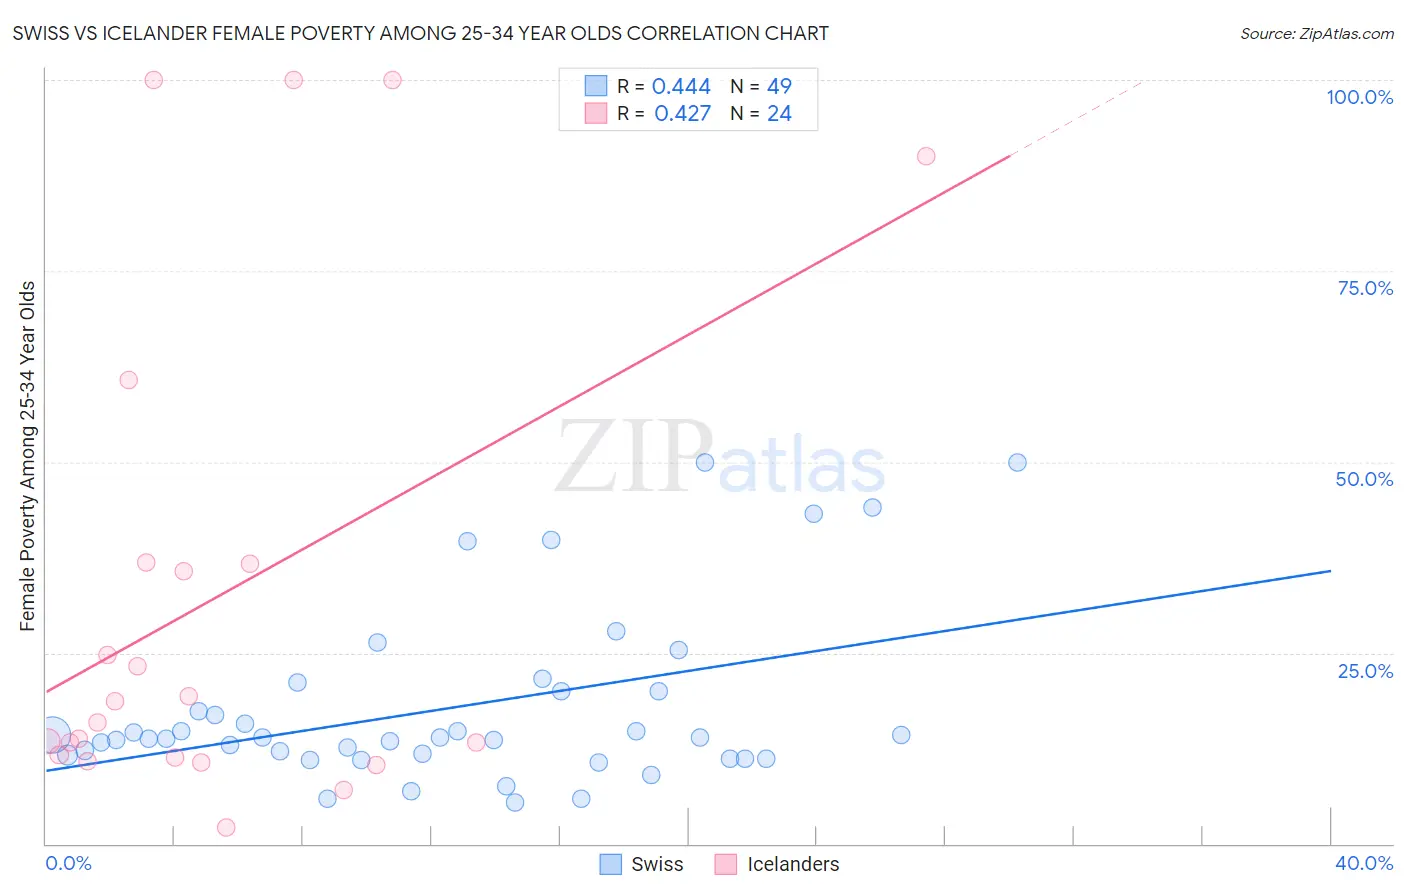 Swiss vs Icelander Female Poverty Among 25-34 Year Olds